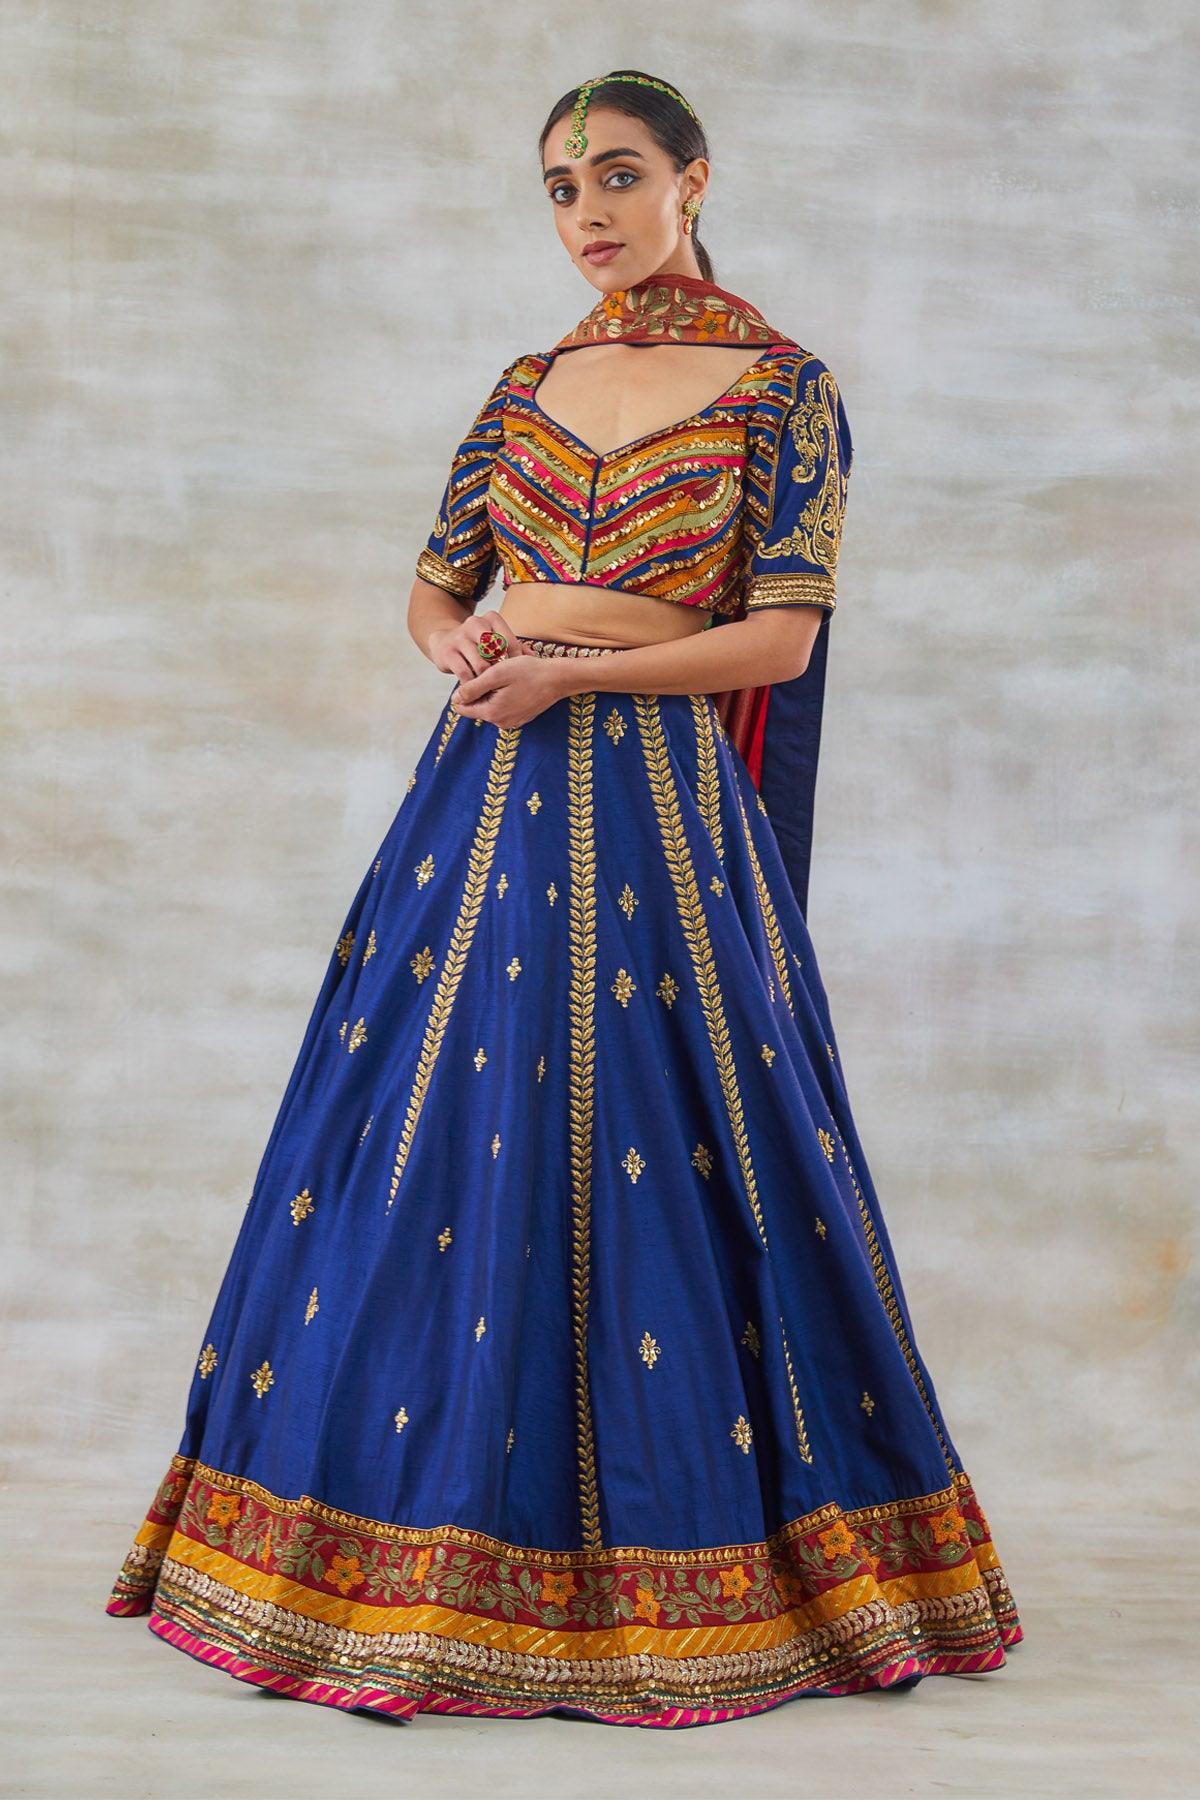 Ria Malhotra in Aprajita Aari and Resham Embroidery Lehenga - Studio Bagechaa